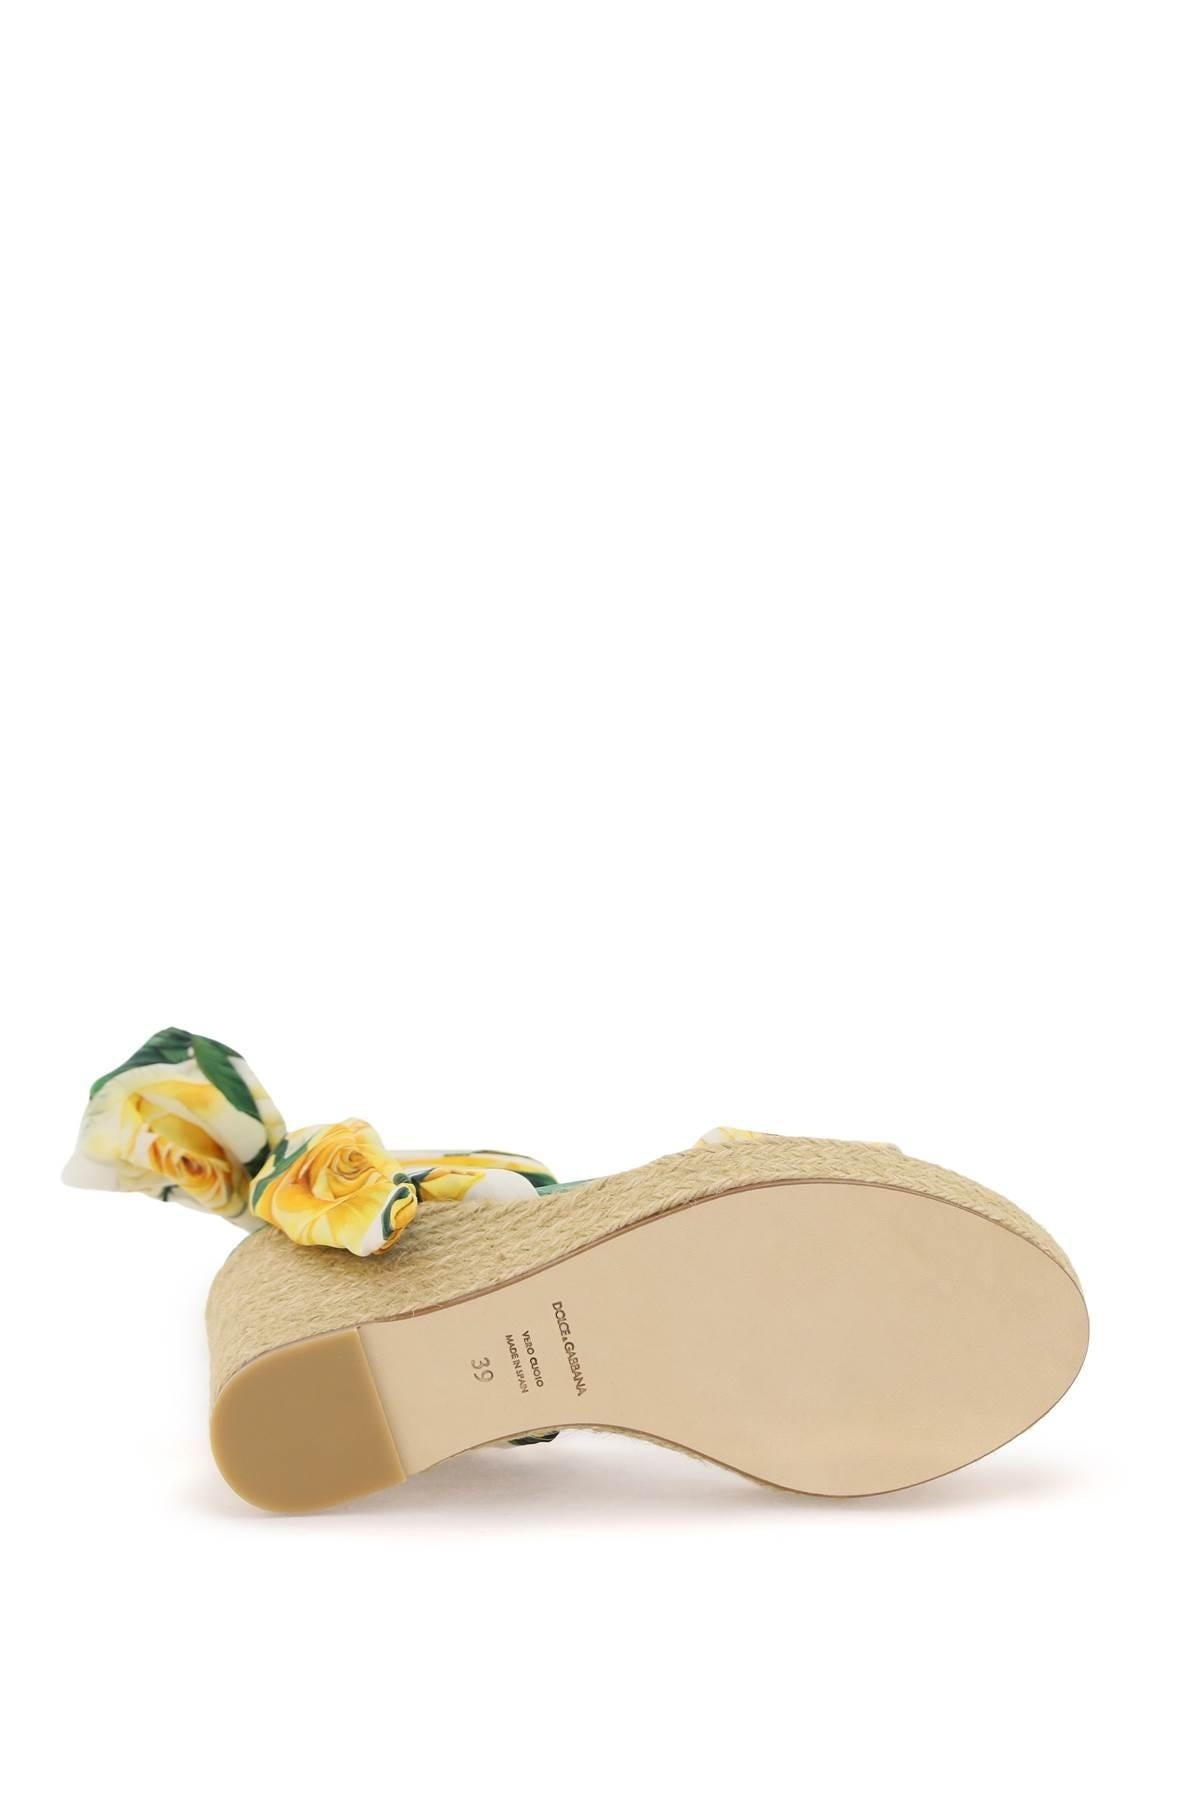 Dolce & Gabbana Lolita Wedge Sandals - 5